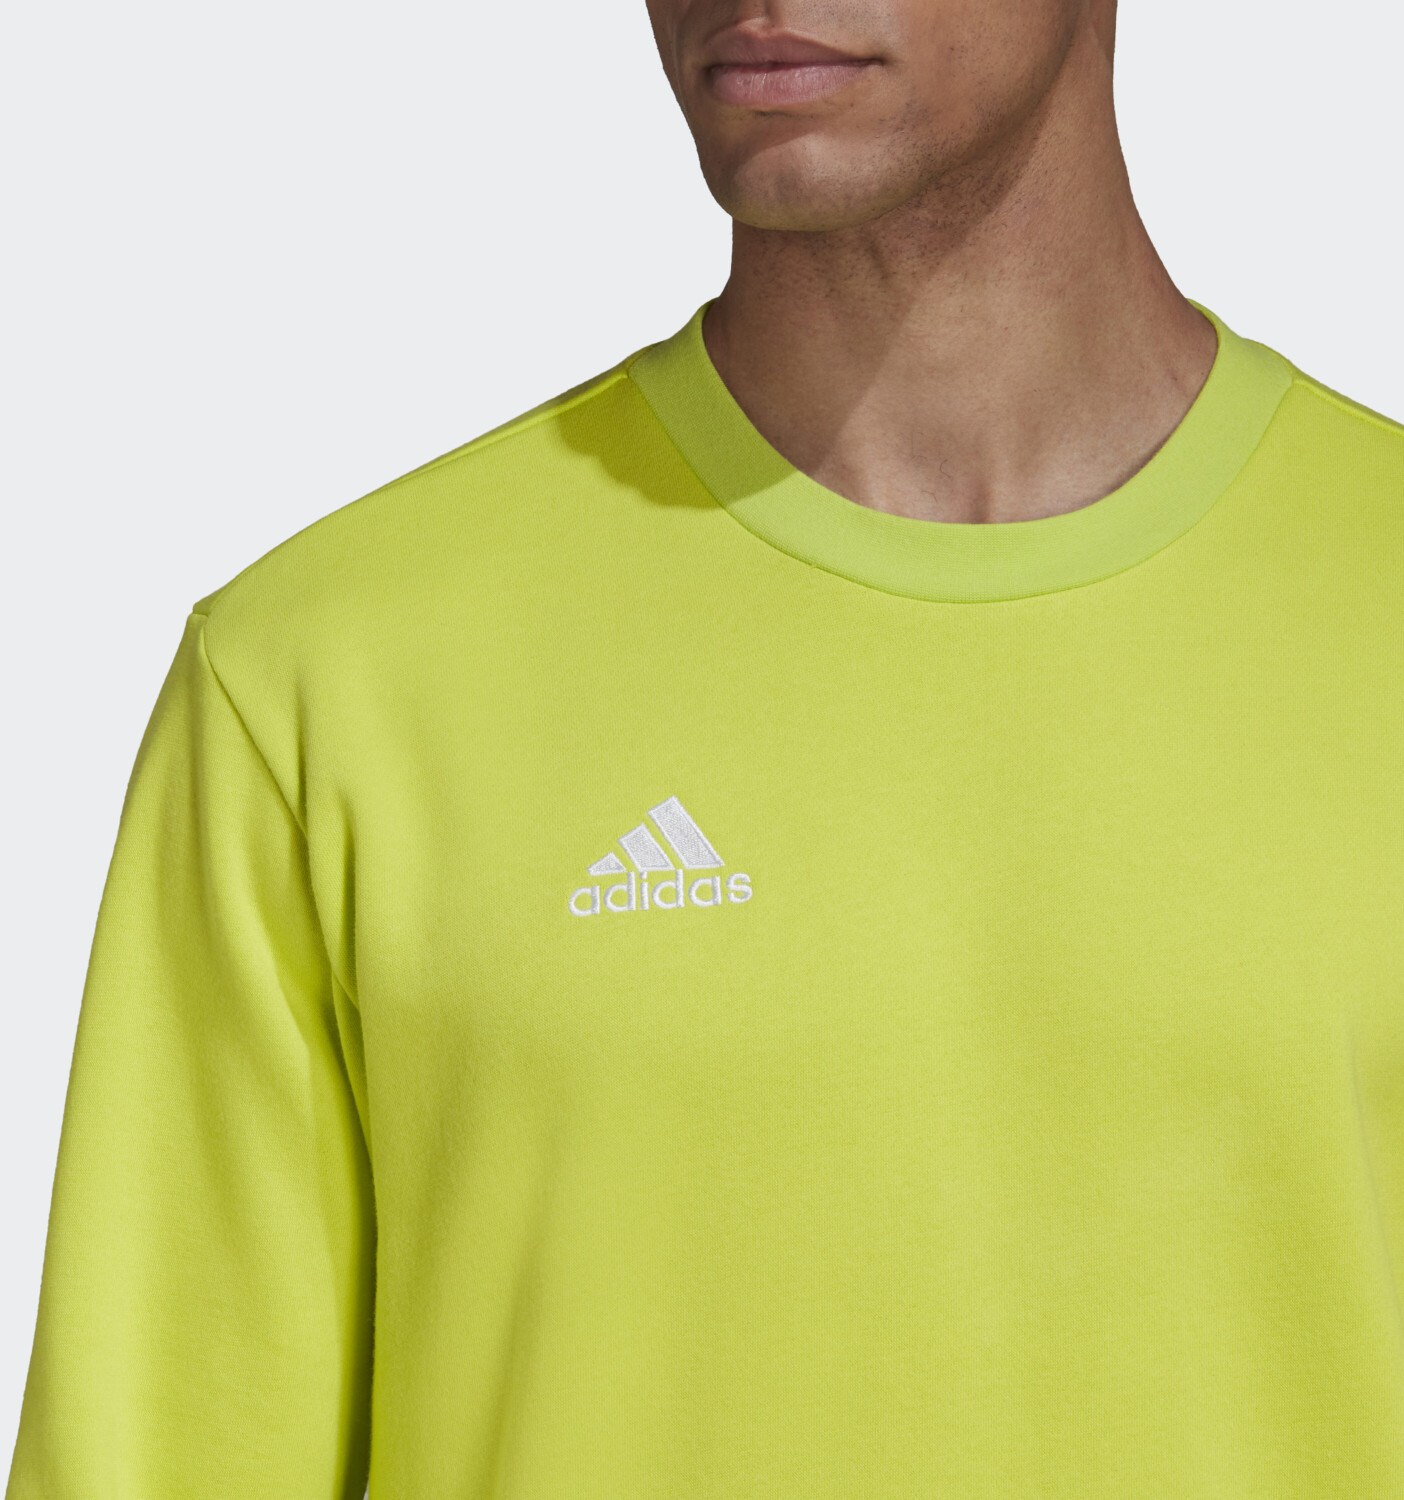 Adidas Entrada 22 Sweatshirt team semi sol yellow ab 19,95 € |  Preisvergleich bei